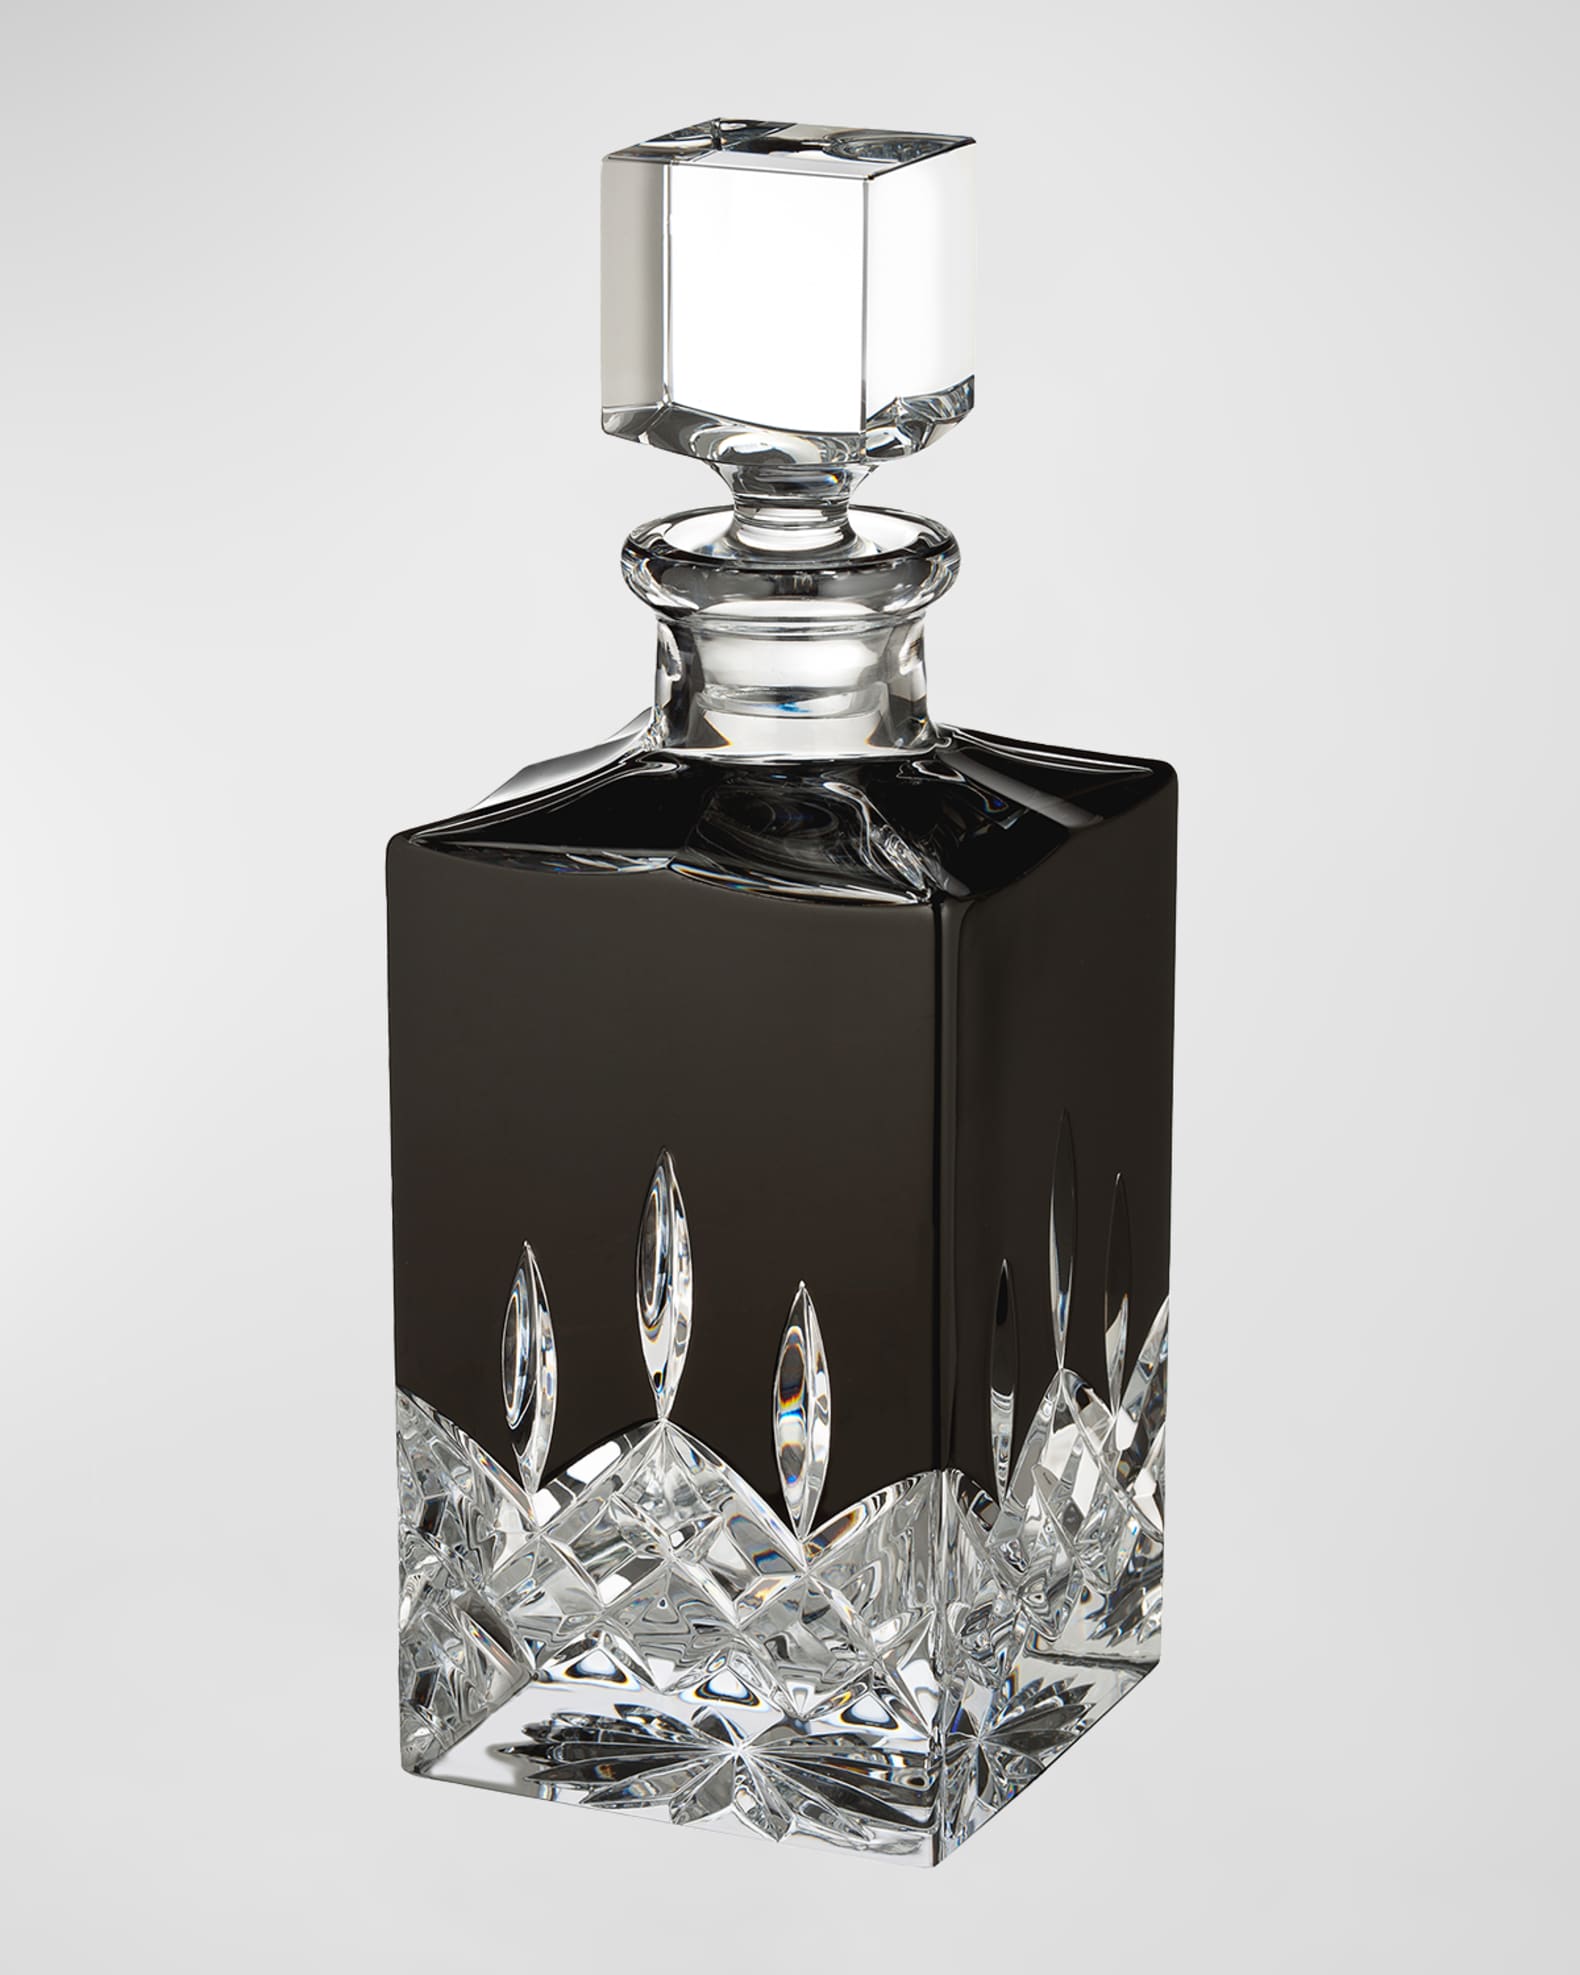 Calla Lily Perfume Bottle - An American Craftsman